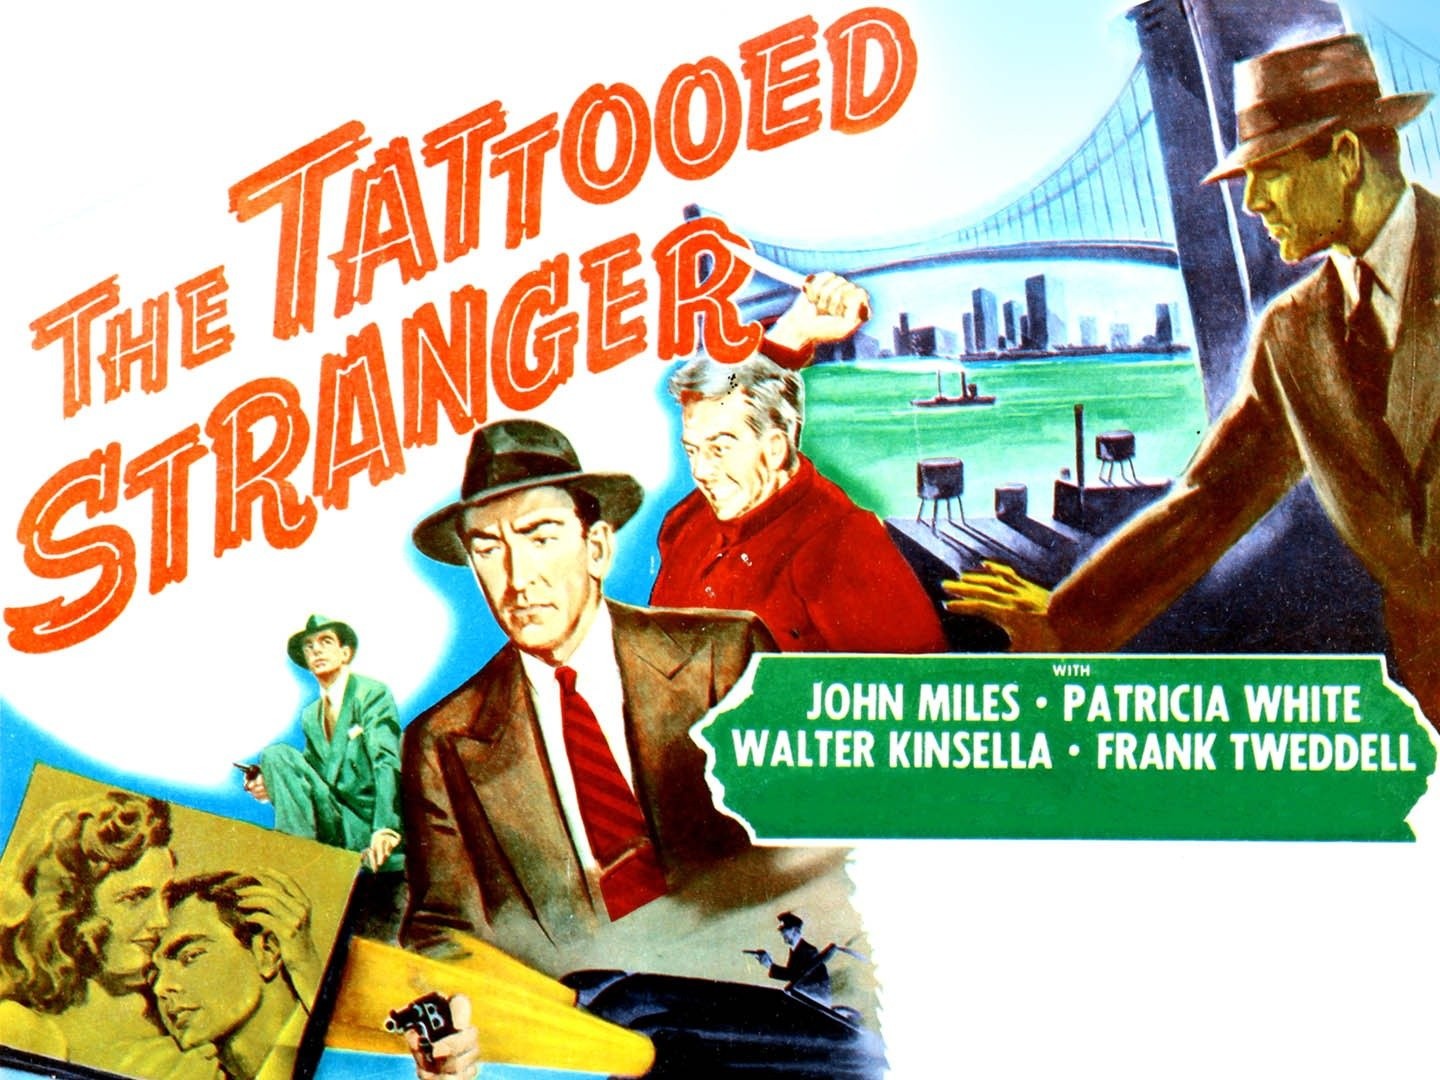 The Tattooed Stranger 1950  IMDb